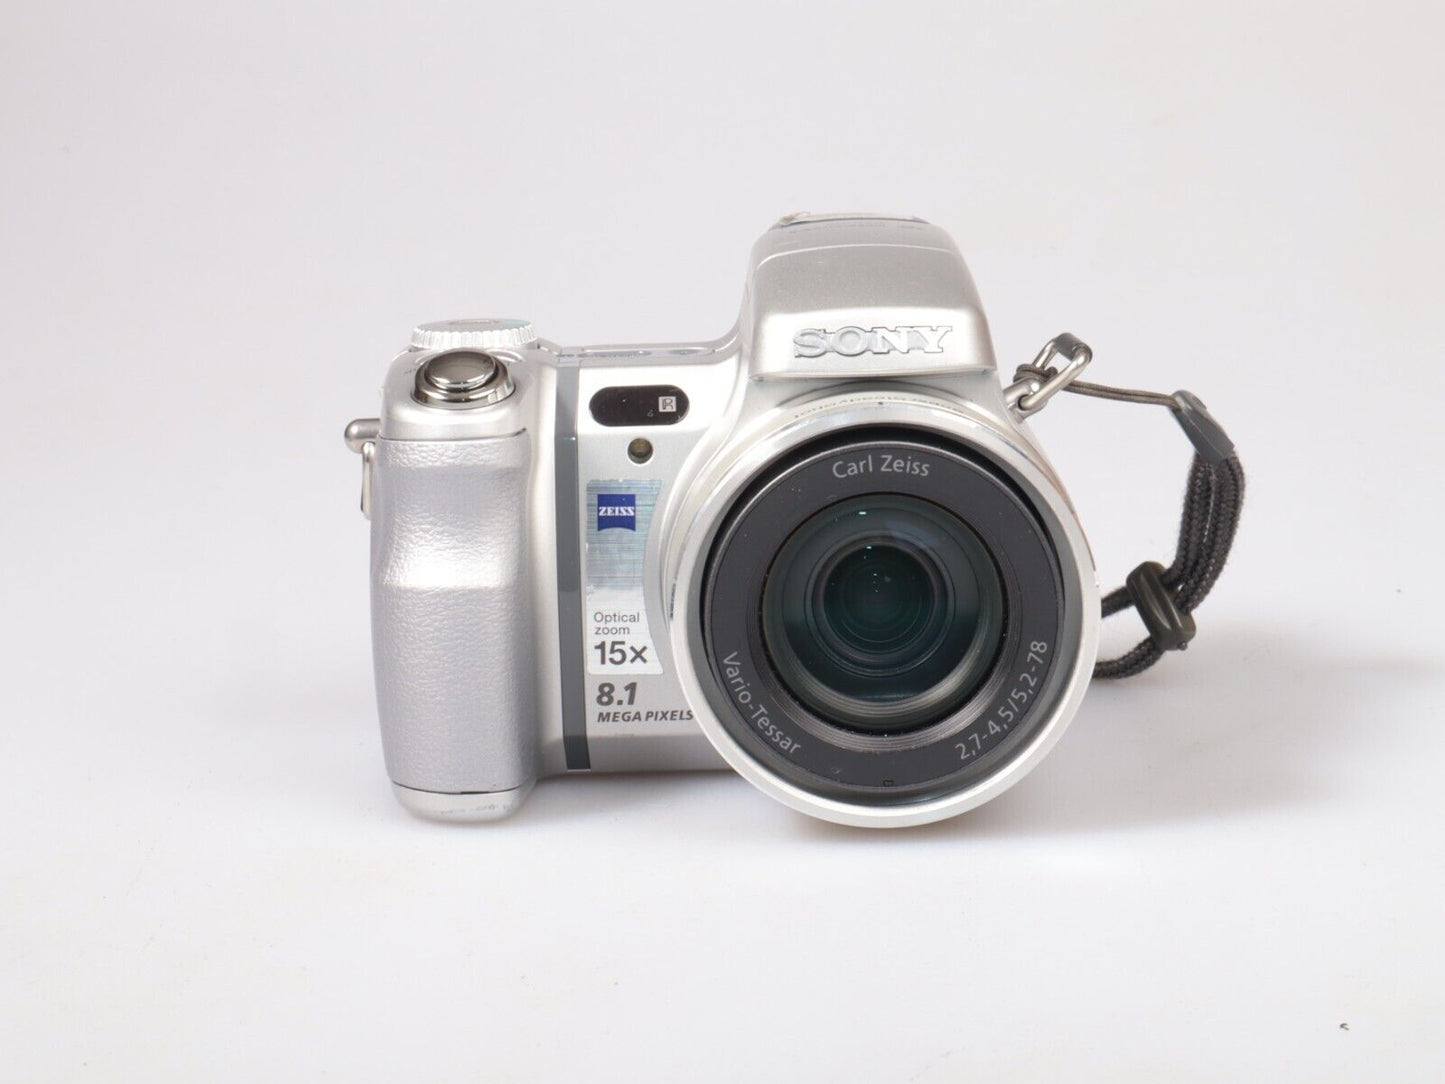 SONY CyberShot DSC-H9 | Digital Bridge Camera | 8.1 MP | Silver